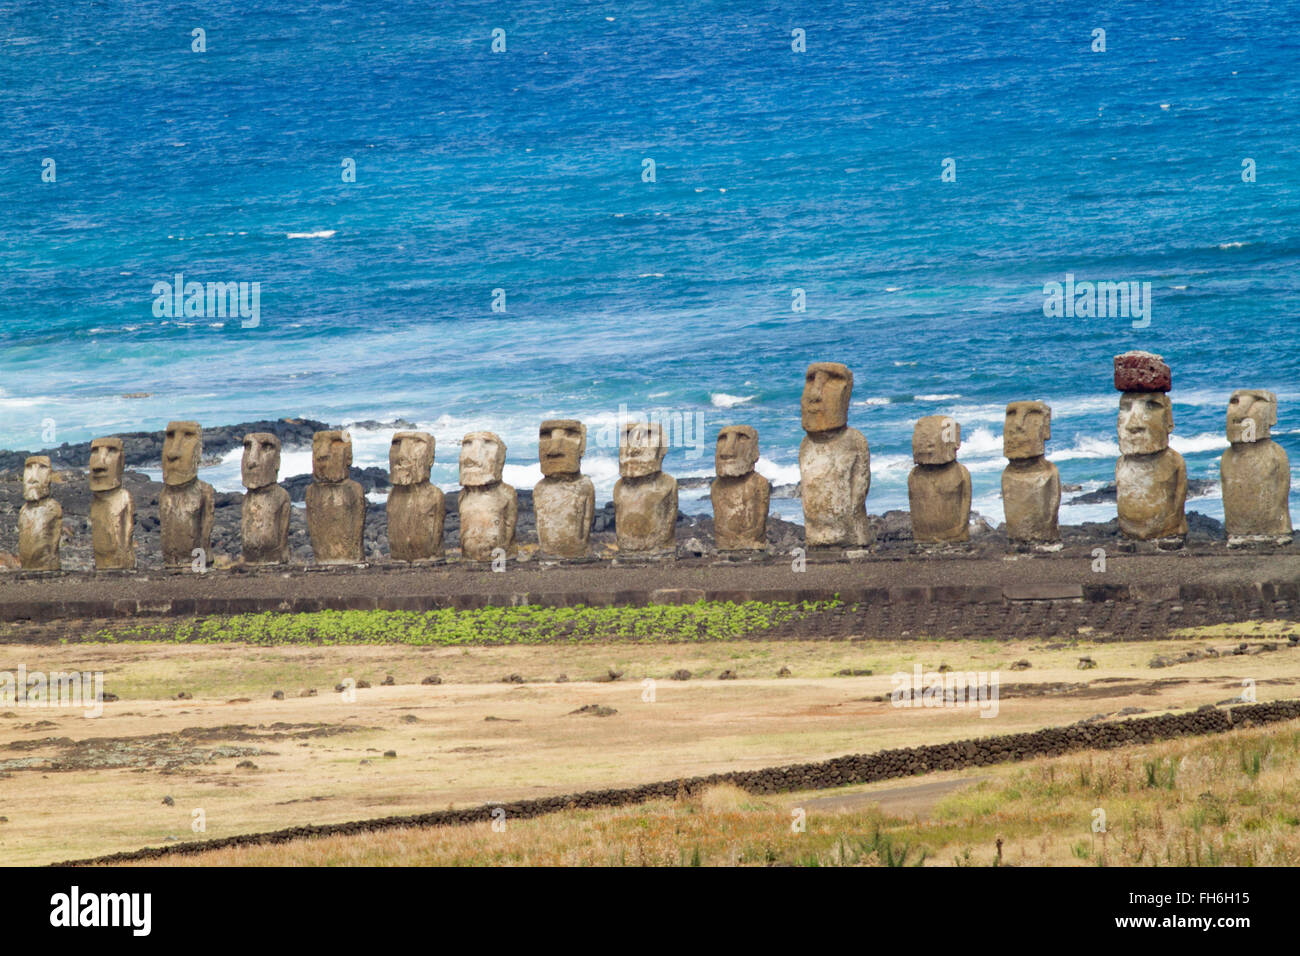 Quince moai (estatuas) sobre la plataforma en Ahu Tongariki Isla de Pascua, Chile Foto de stock